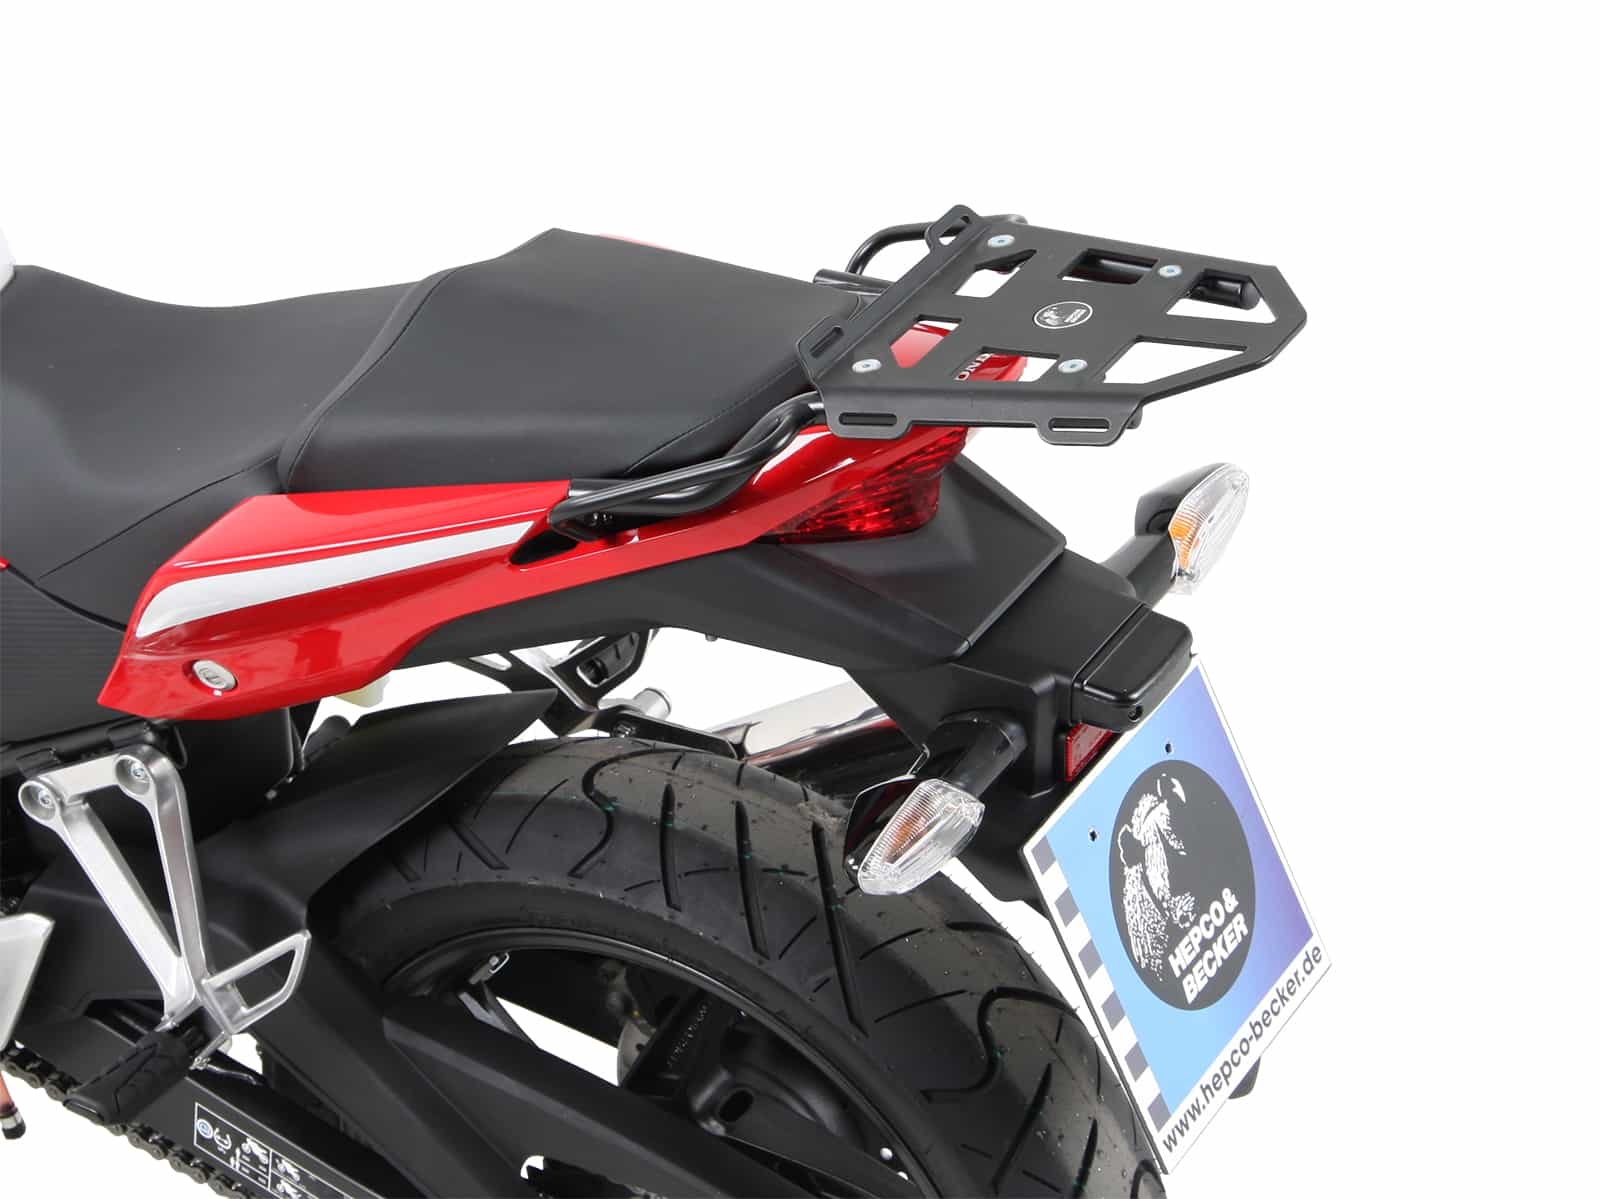 Minirack Softgepäck-Heckträger schwarz für Honda CBR 125 R (2011-)